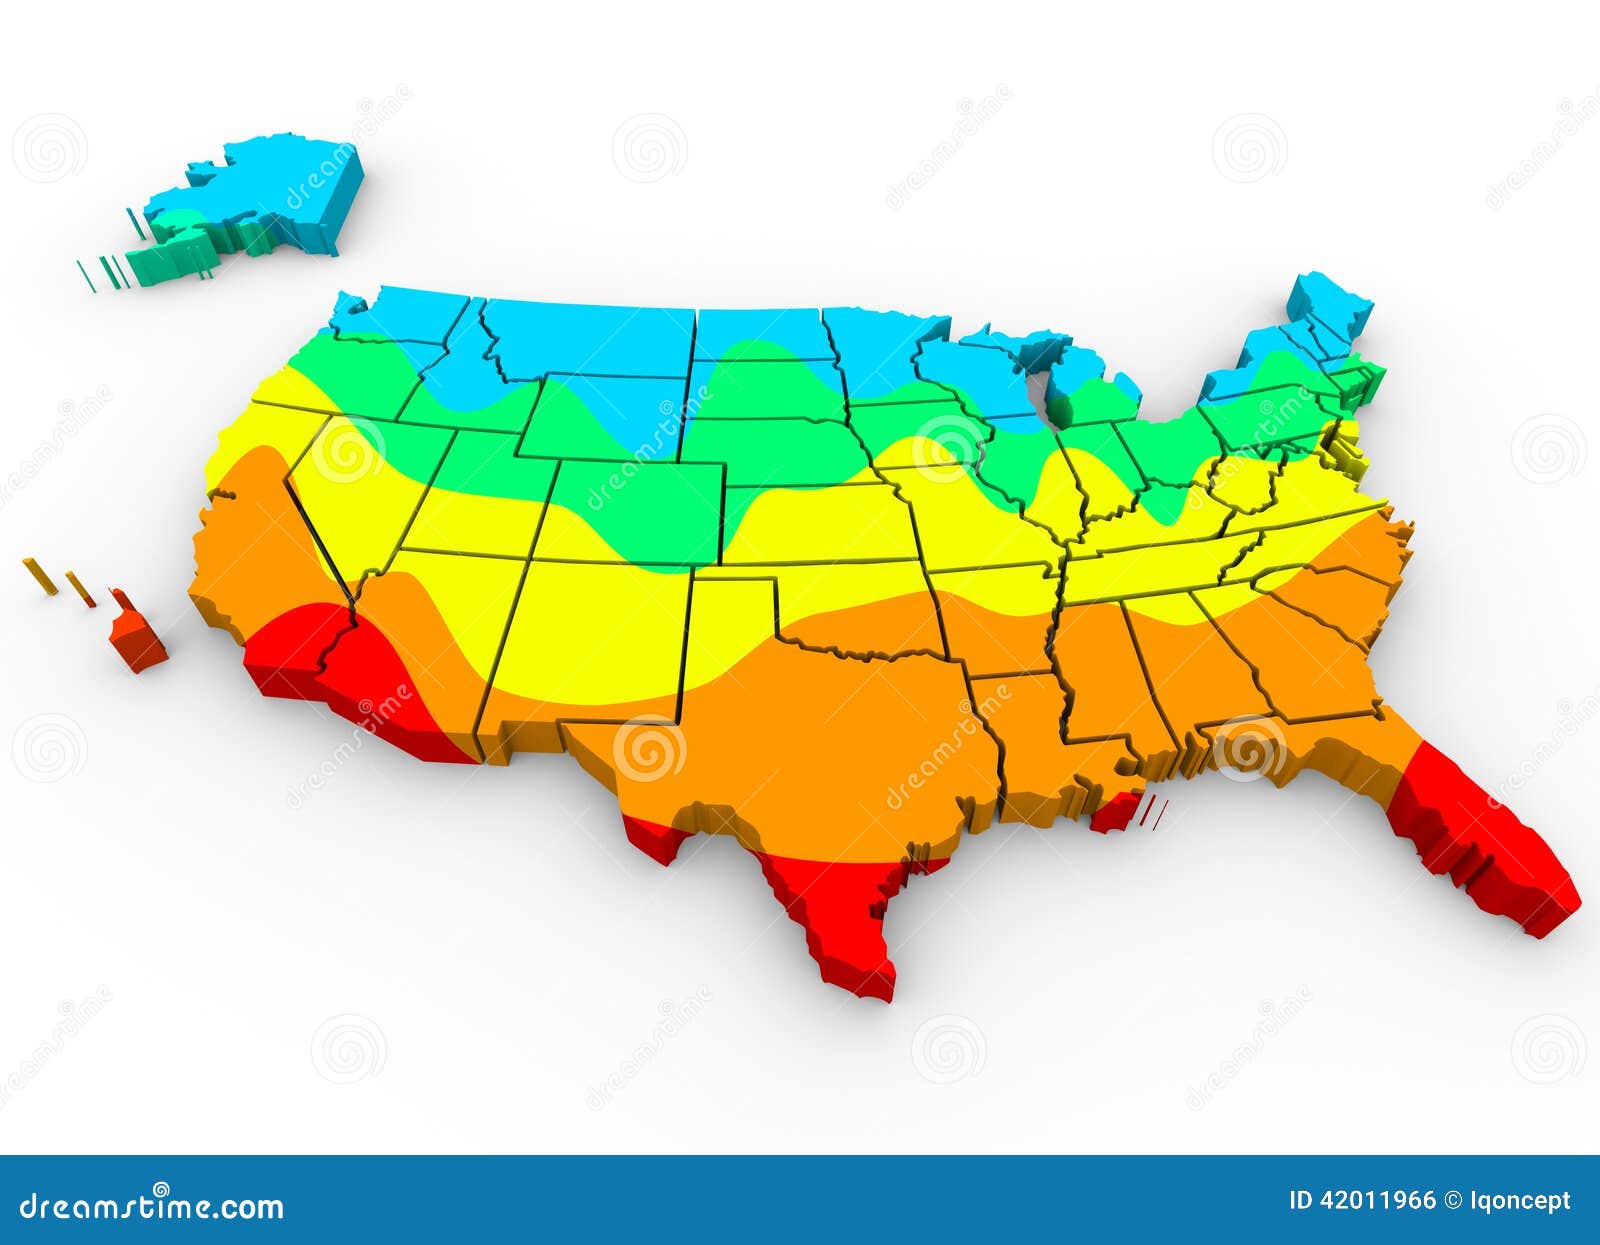 united states america map average temperatures hottest coldest r